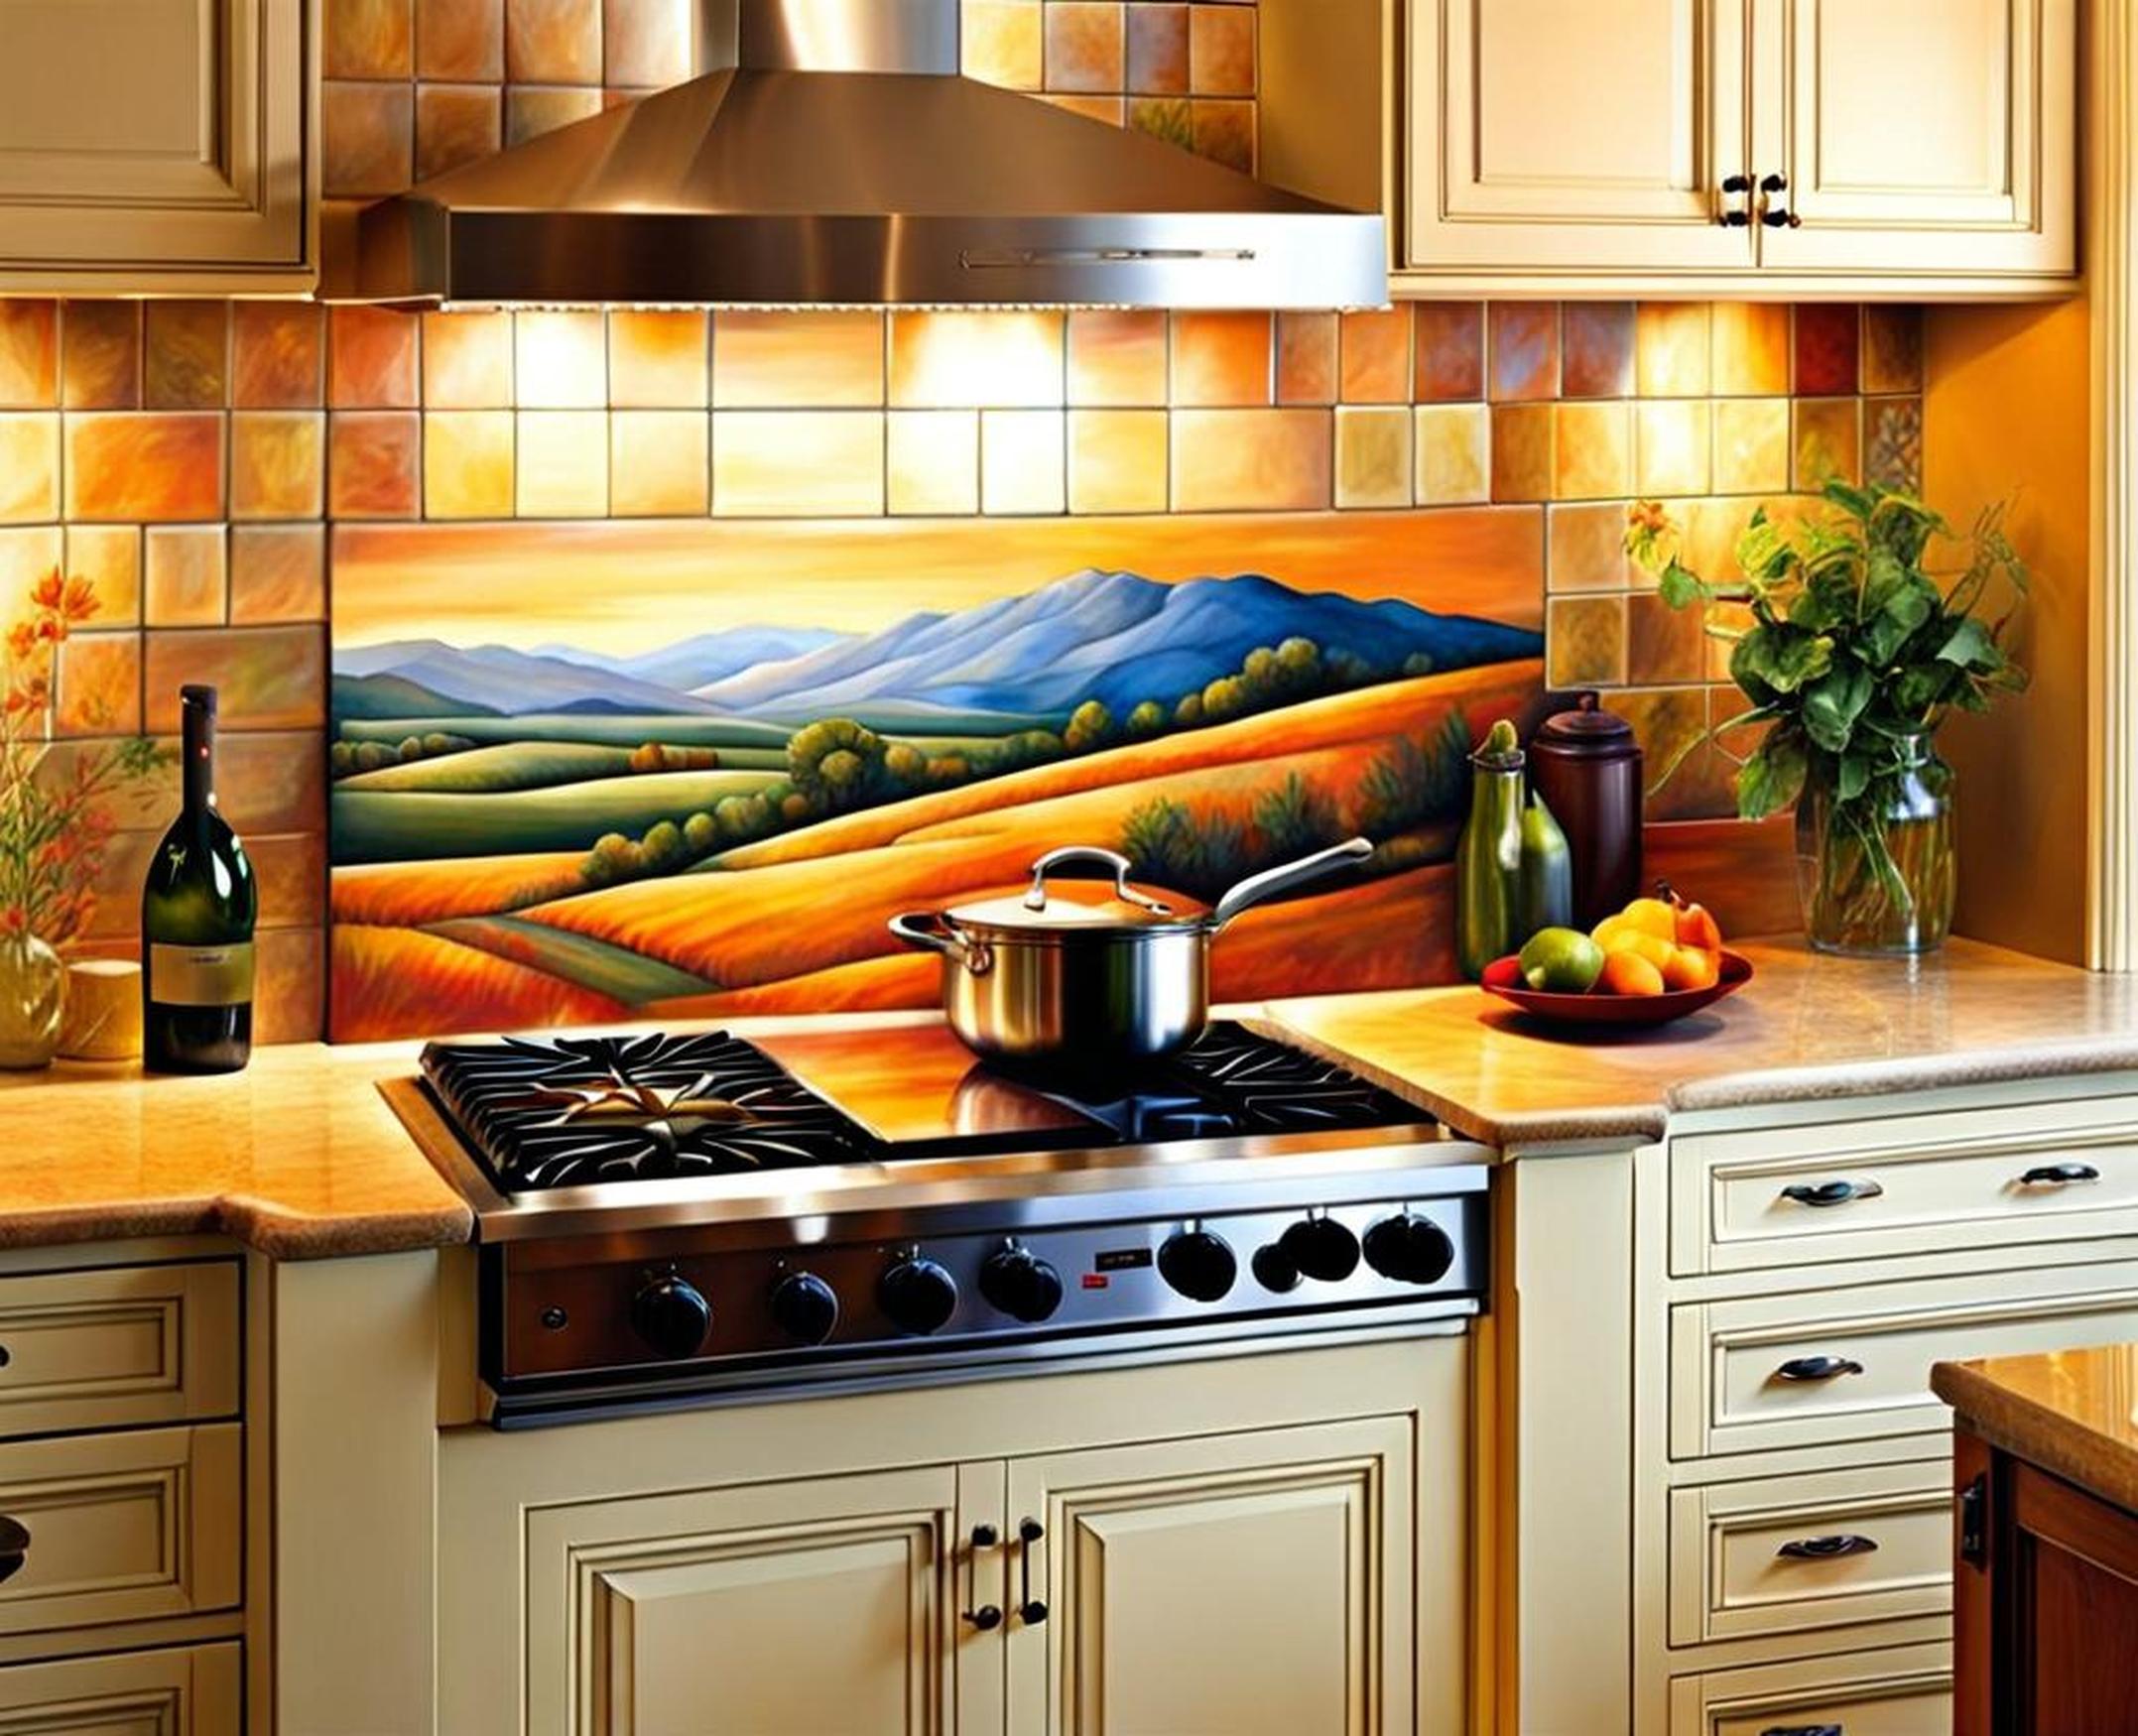 tile mural kitchen backsplash ideas